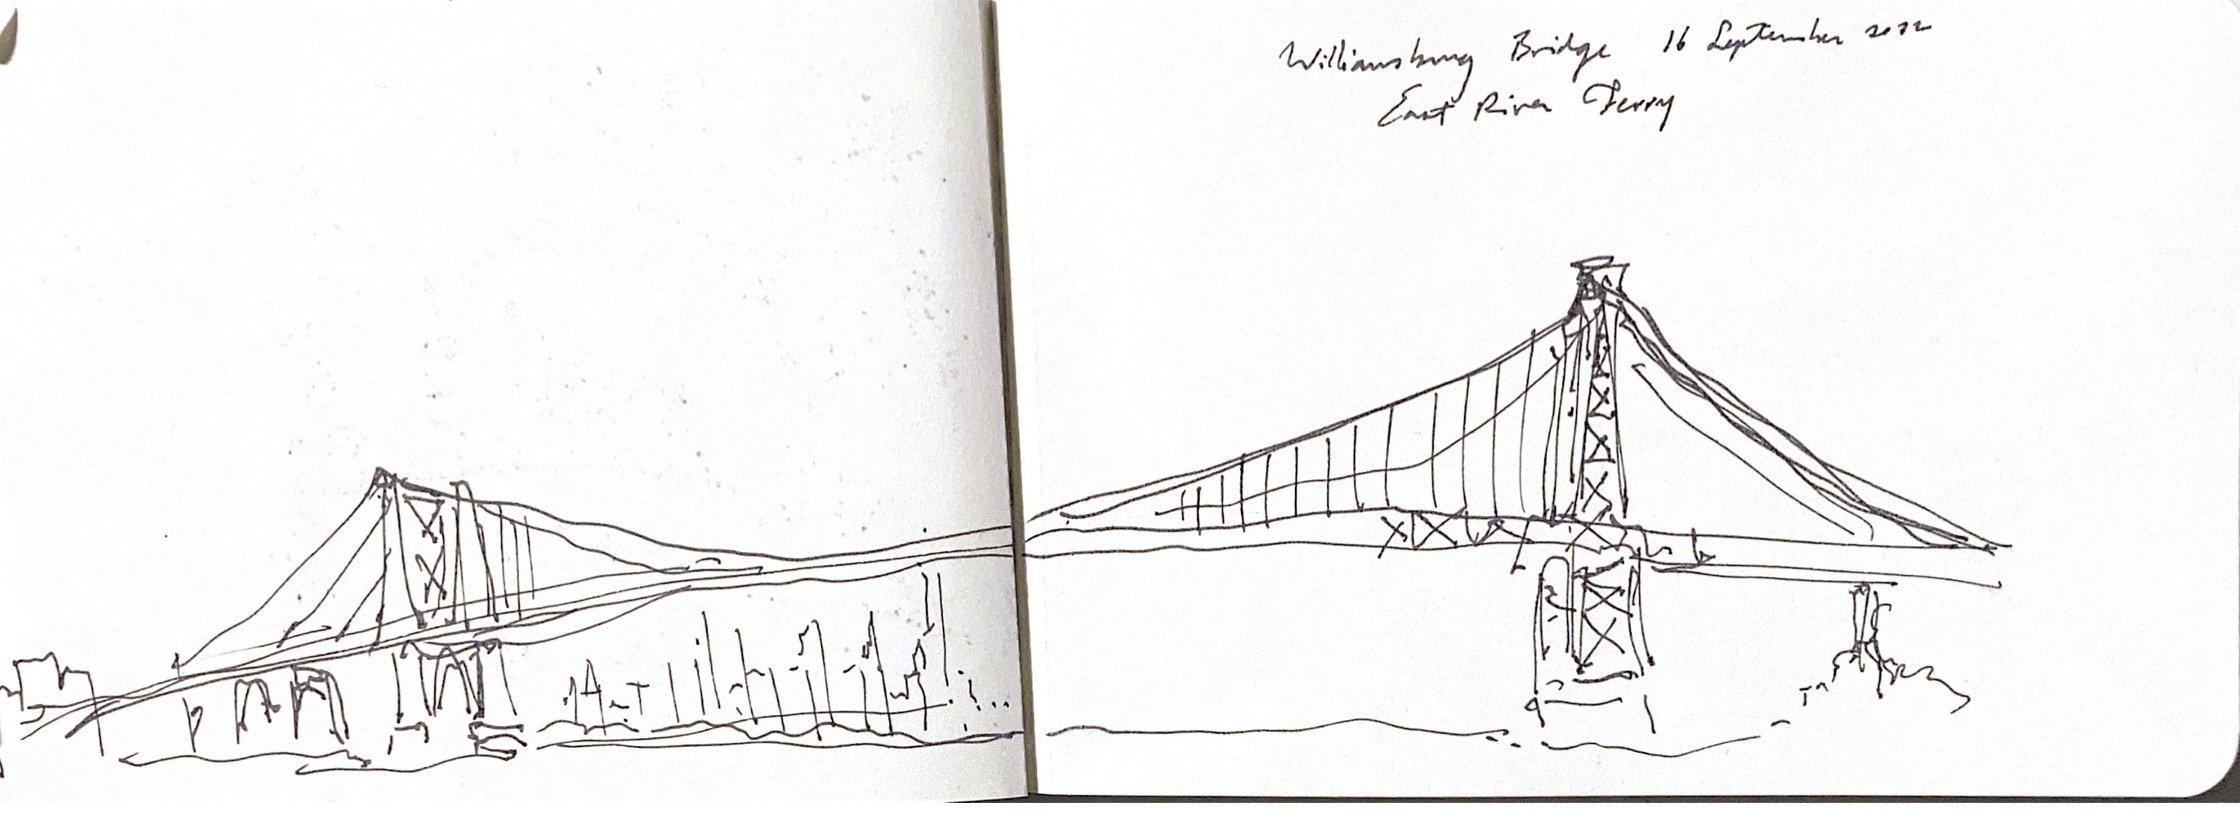 Williamsburg Bridge Pocket.jpg